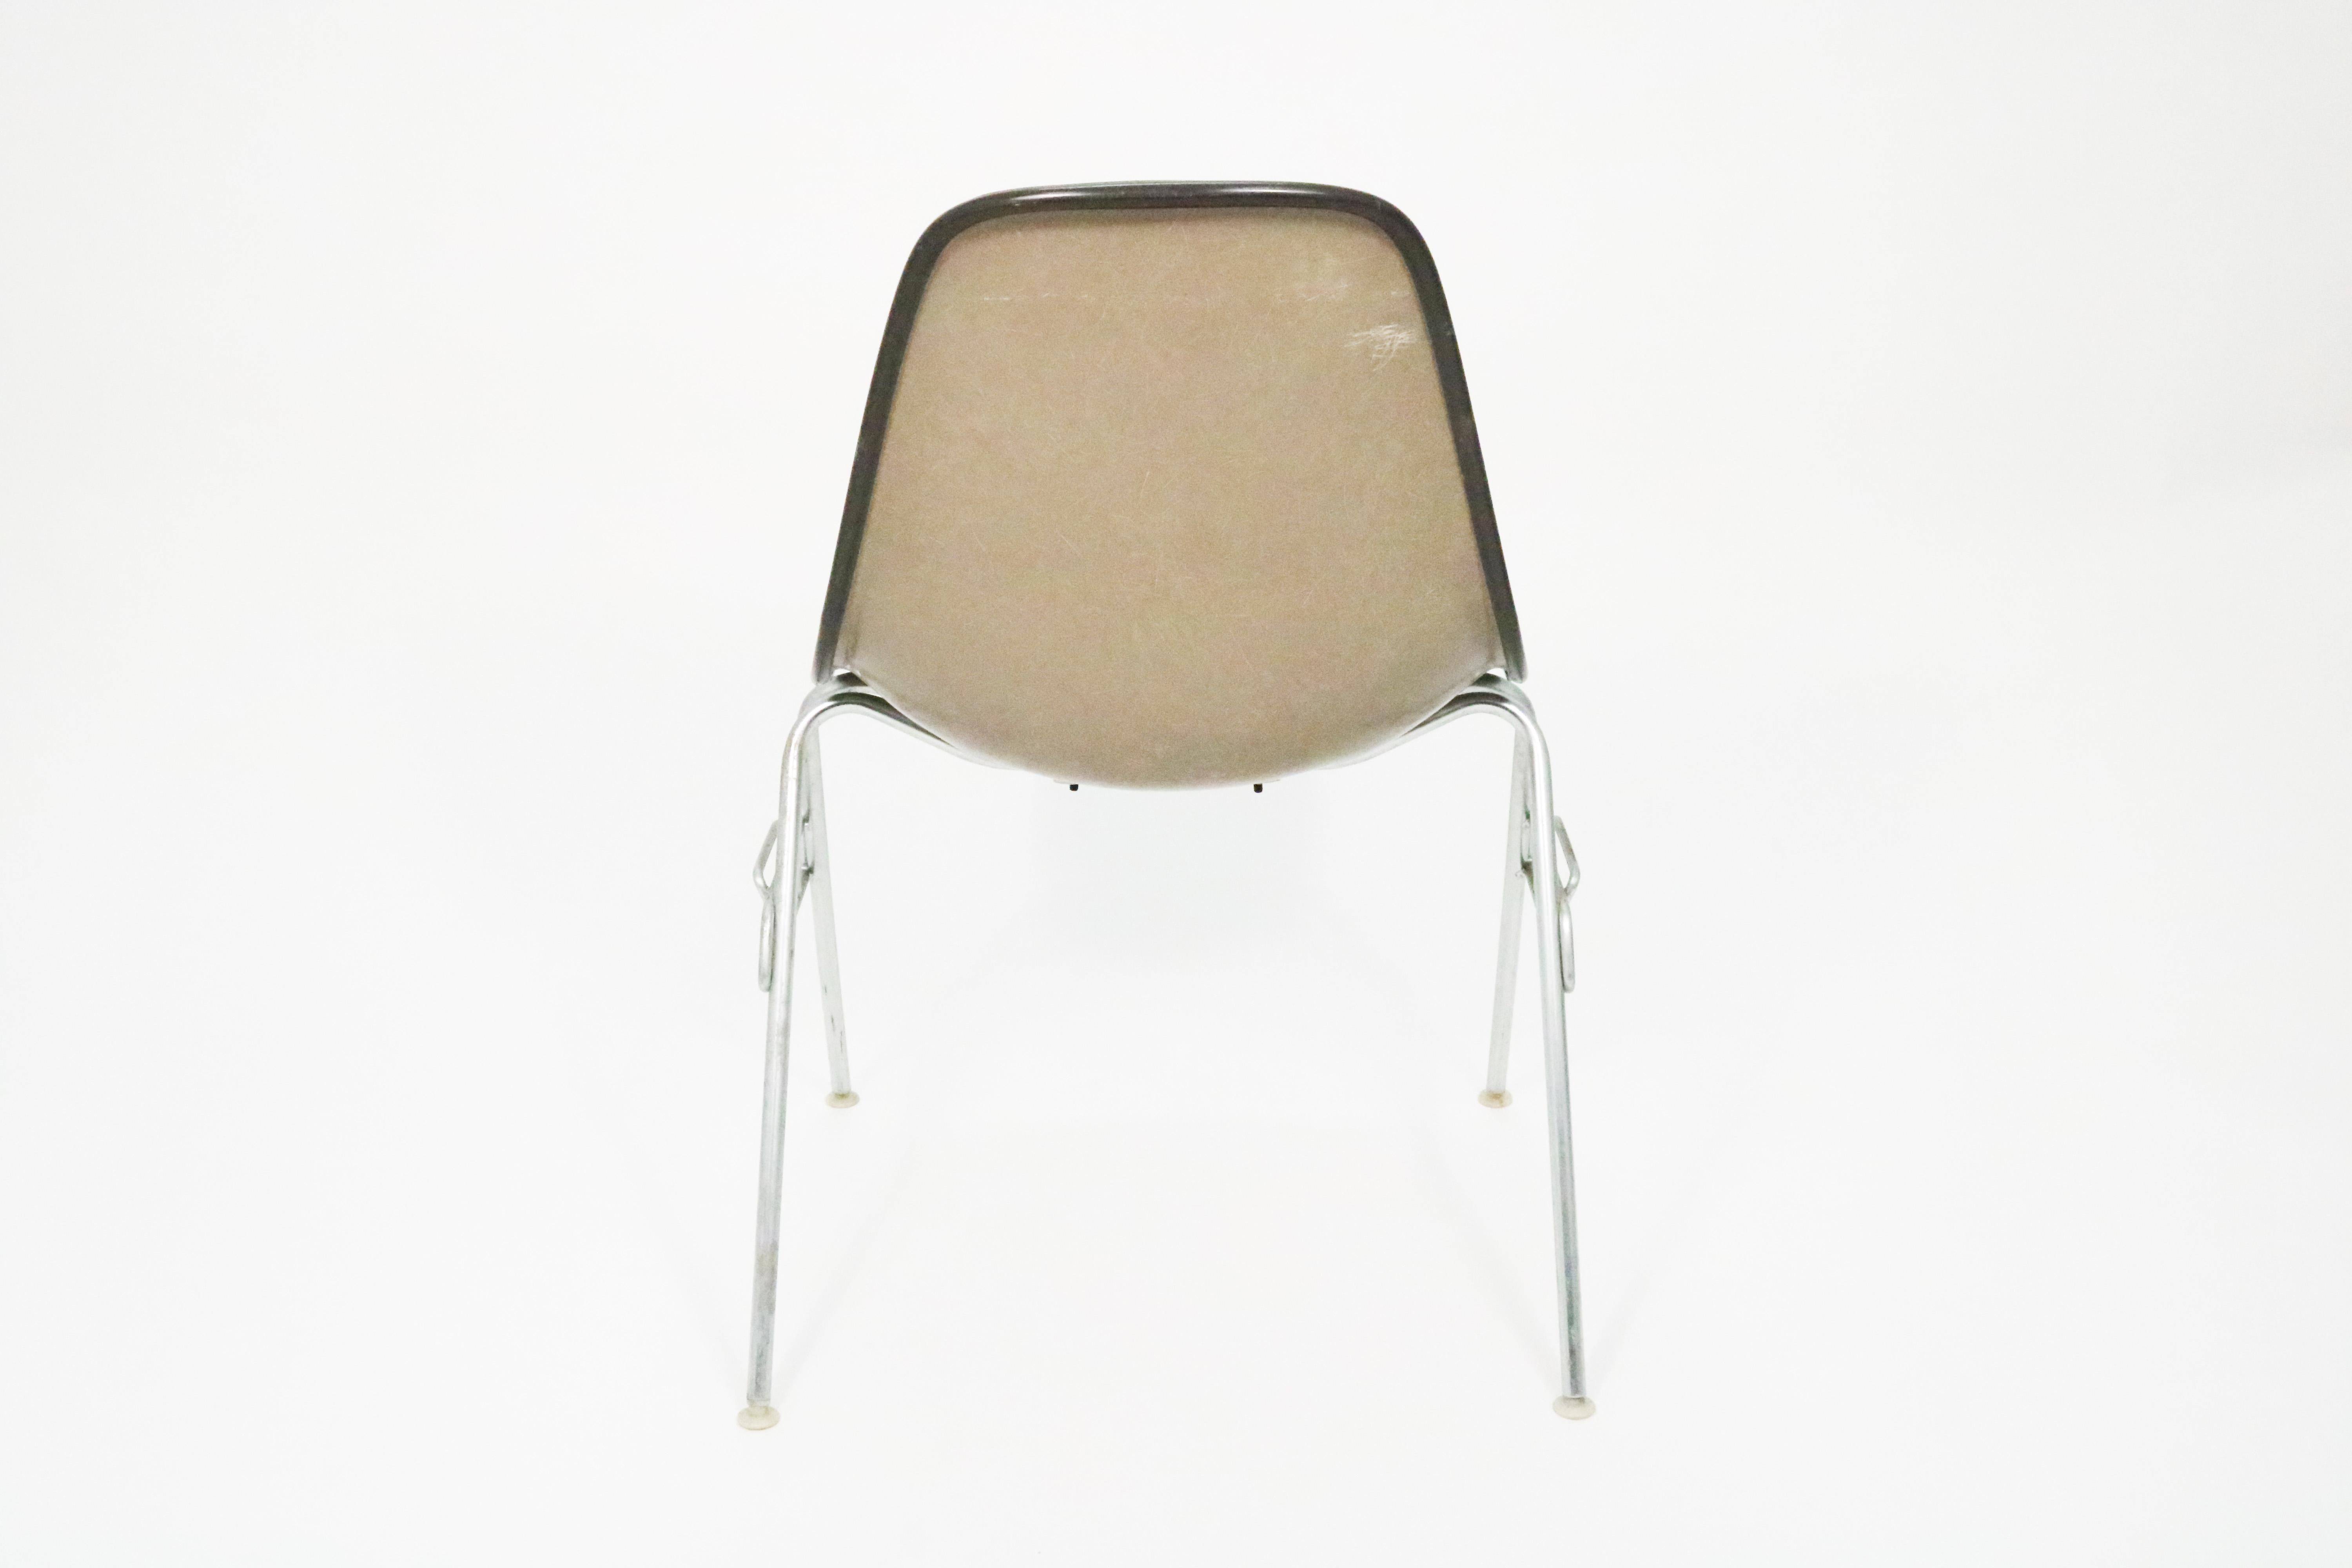 Molded Eames for Herman Miller Fiberglass Shell Chair, Green on Stackable Base